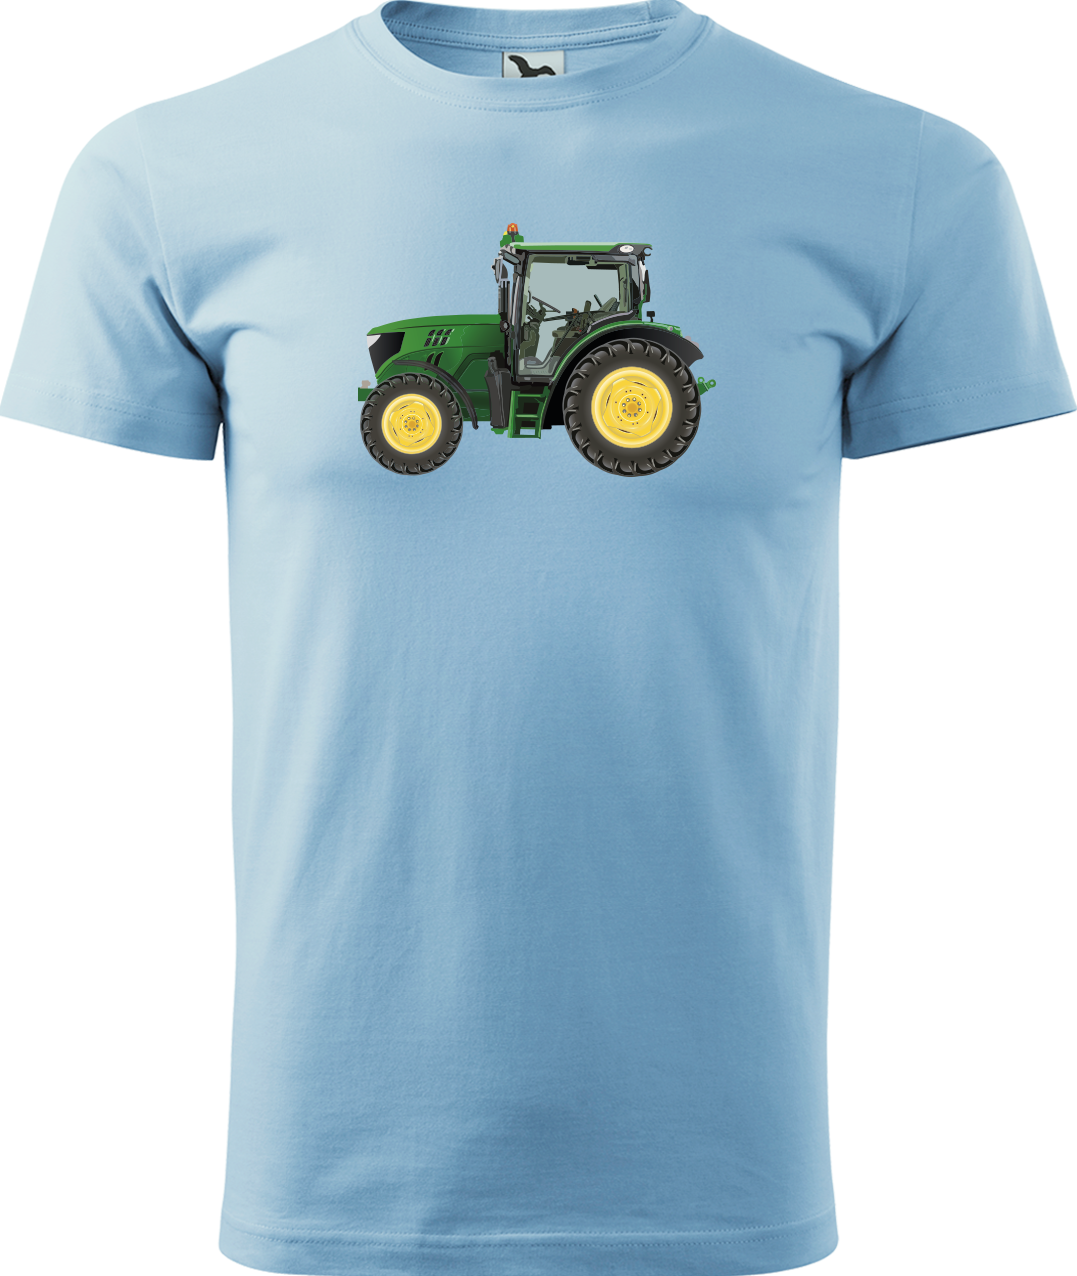 Tričko s traktorem - Zelený traktor Velikost: S, Barva: Nebesky modrá (15)